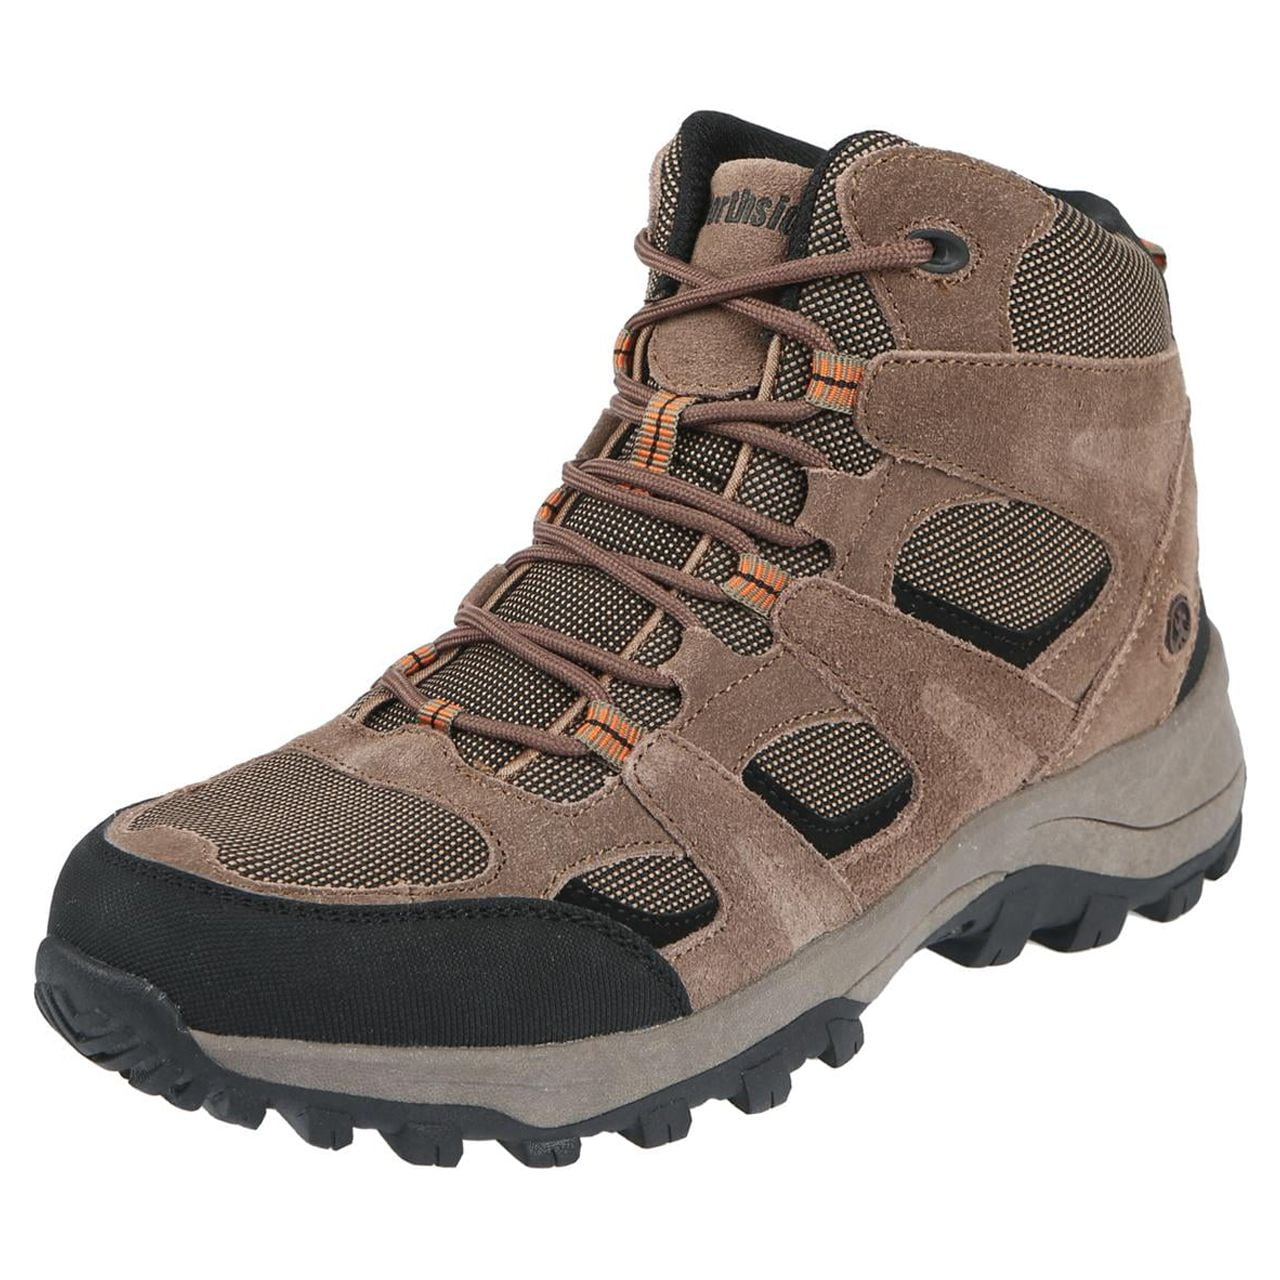 Northside Men's Monroe Mid Leather Hiking Boot - Walmart.com